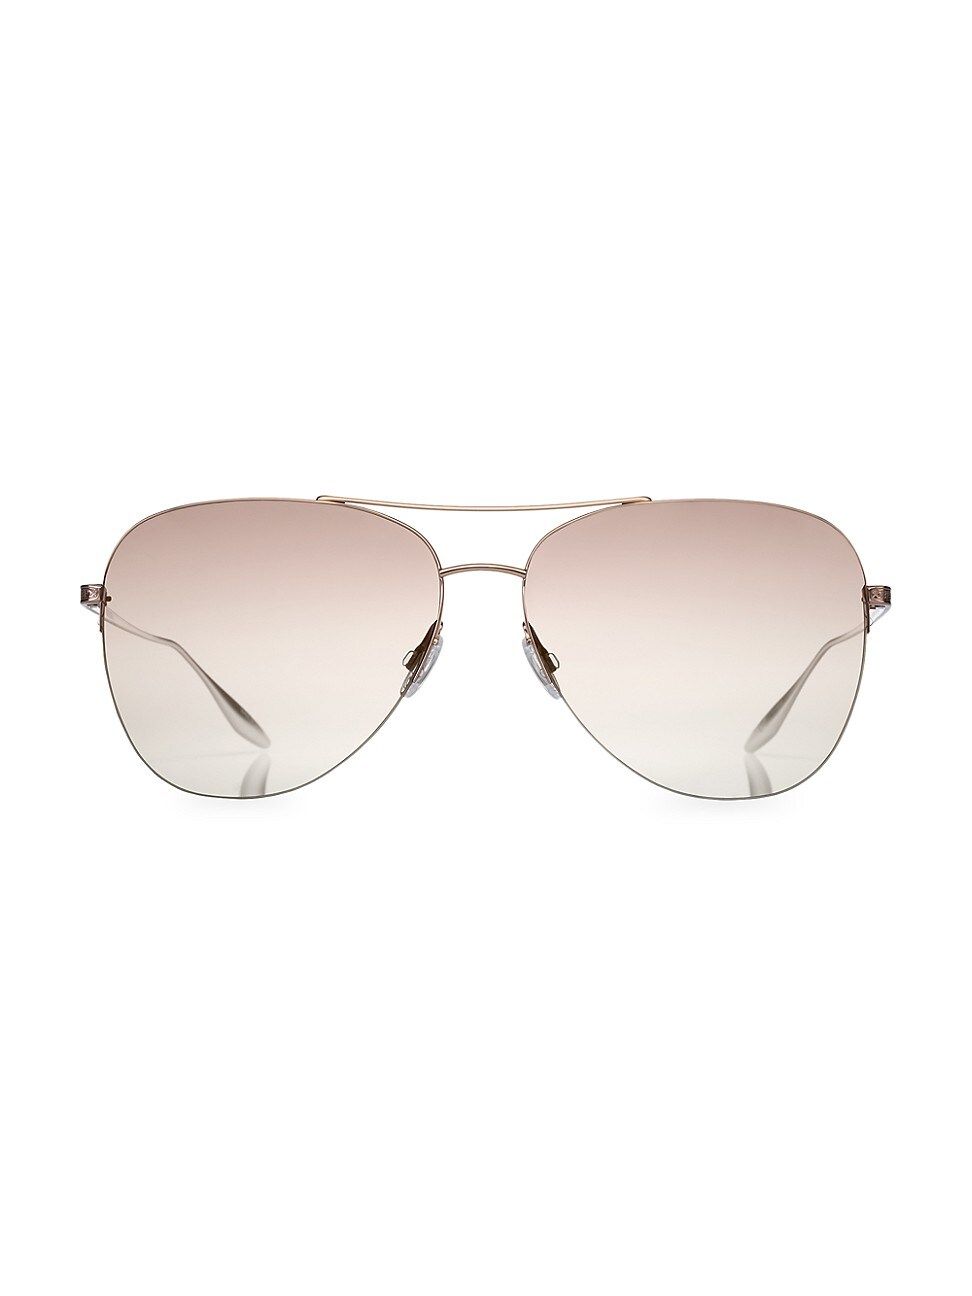 Barton Perreira Women's 62MM Aviator Sunglasses - Rose | Saks Fifth Avenue